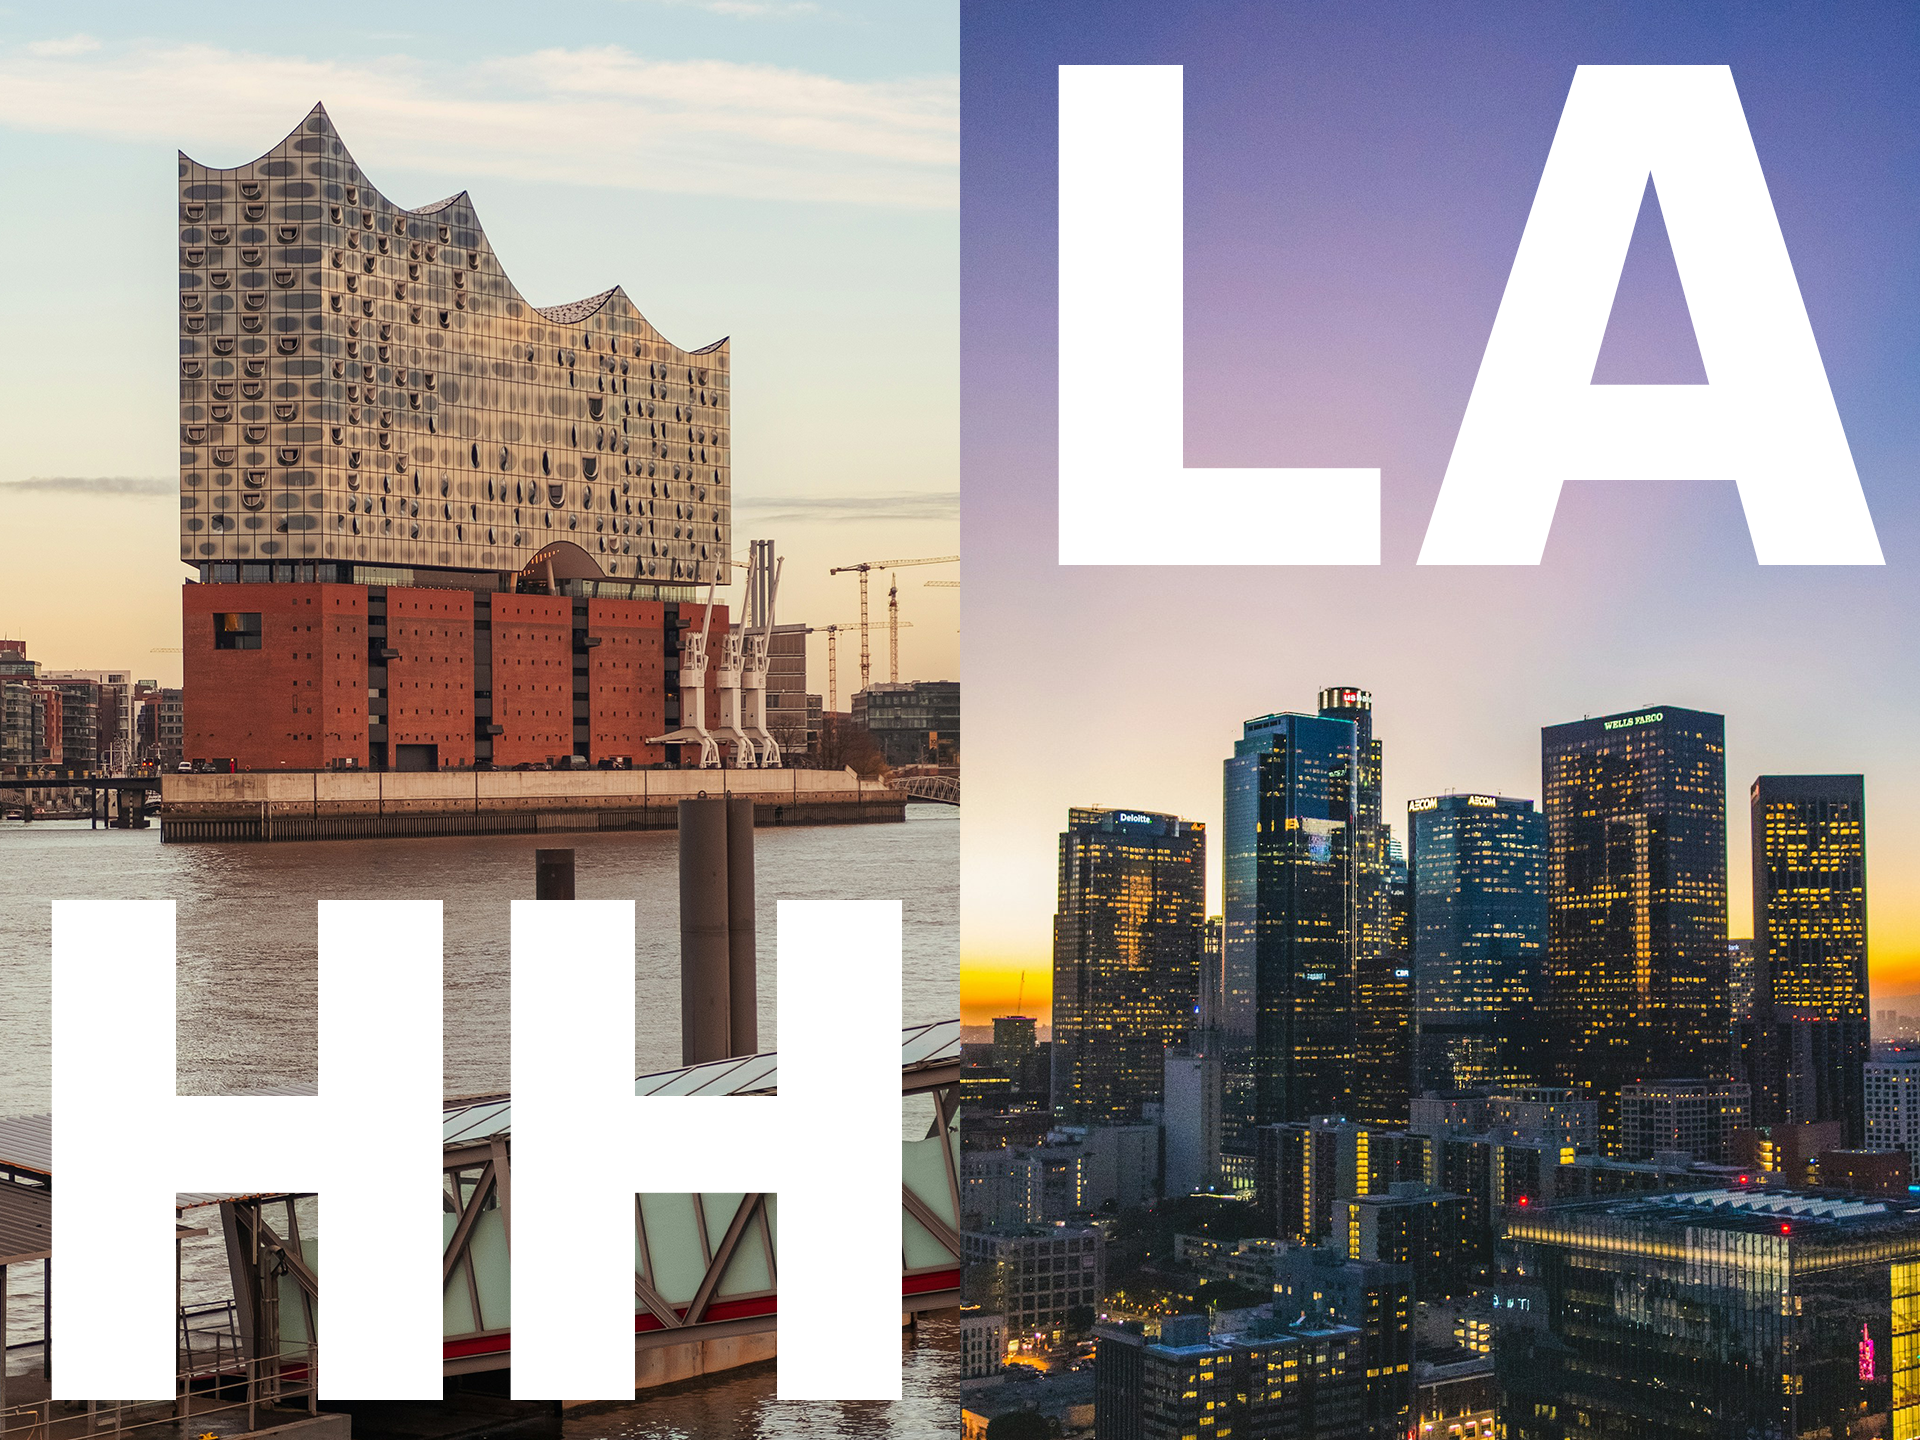 Los Angeles and Hamburg skyline at Day and Night.